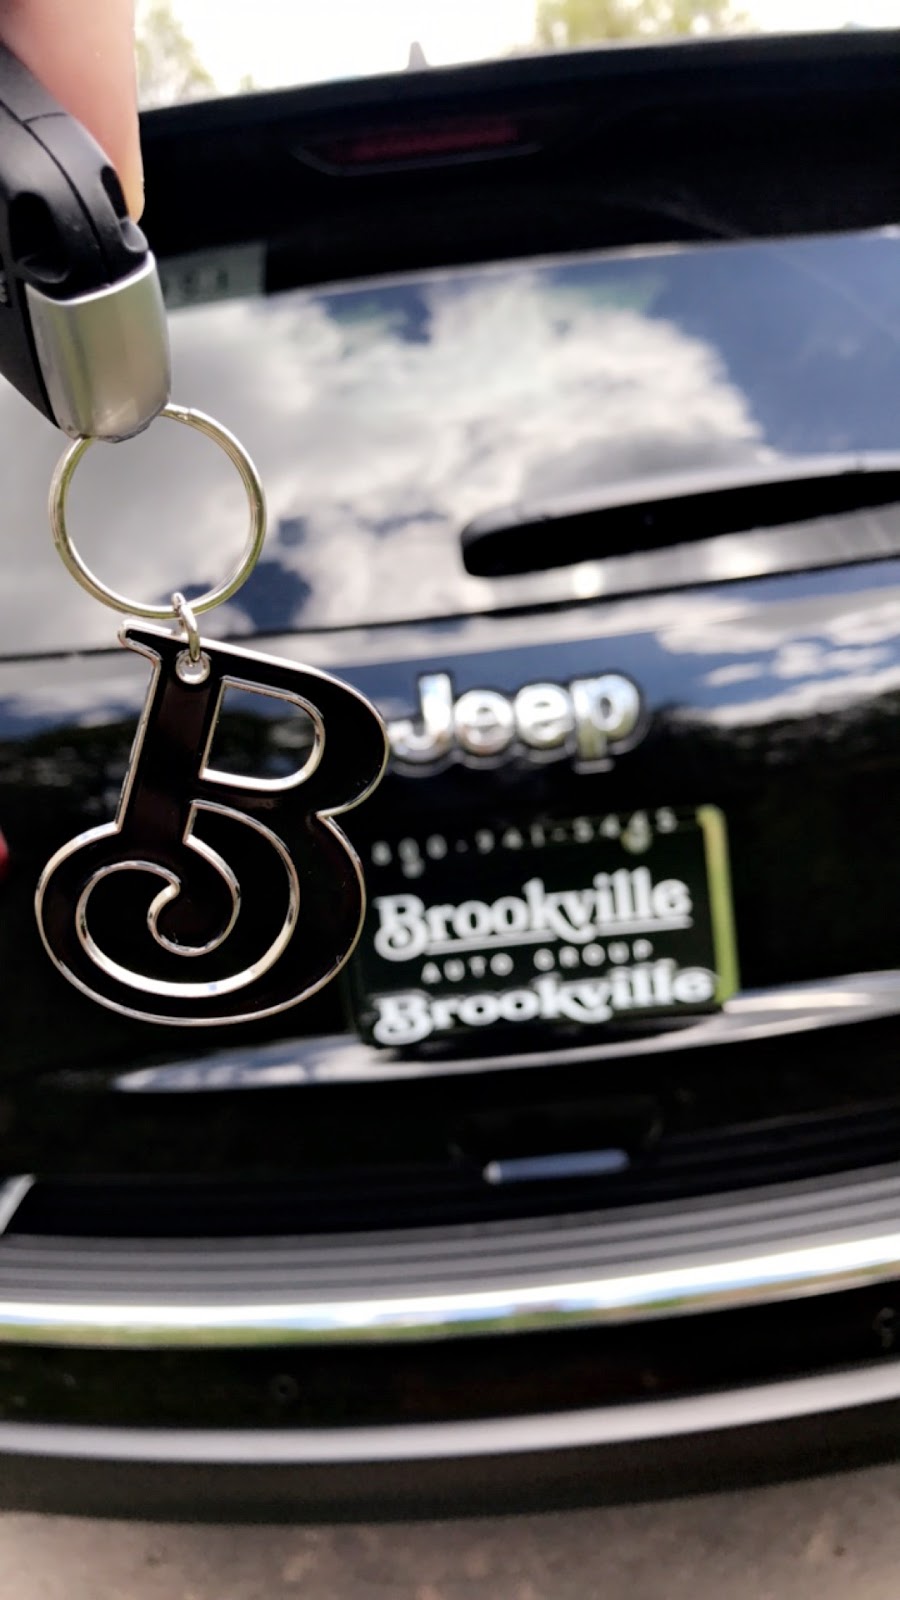 Brookville Auto Group | 265 Sheridan Blvd, Inwood, NY 11096 | Phone: (800) 941-5445